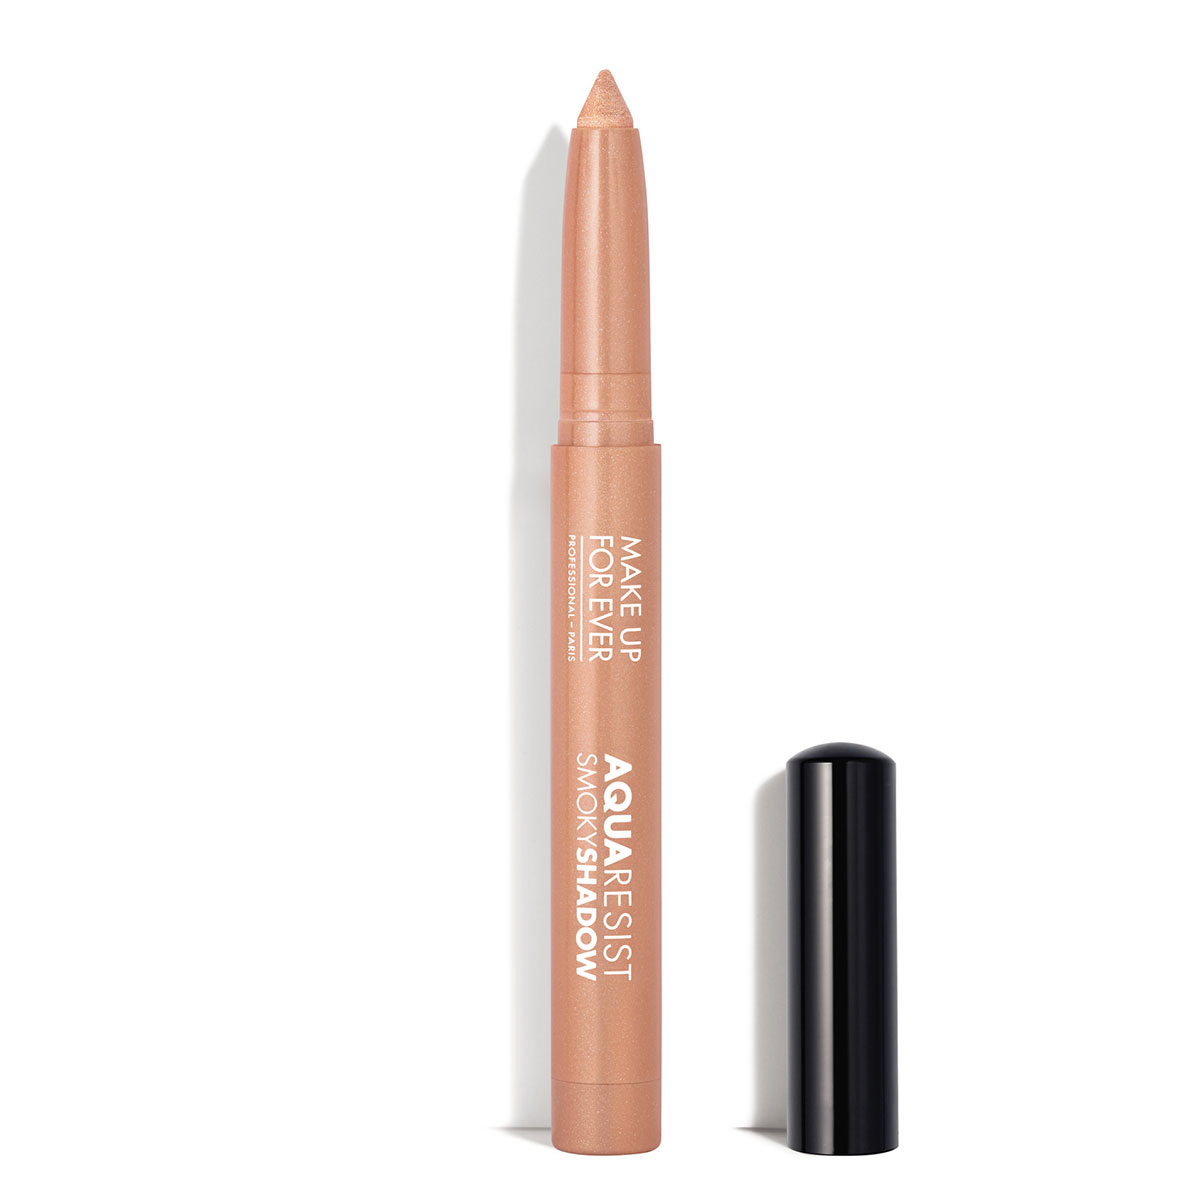 Make Up For Ever Aqua Resist Smoky Shadow Multi Use Eye Color Stick 10 Peony - Light Golden Pink 1.4